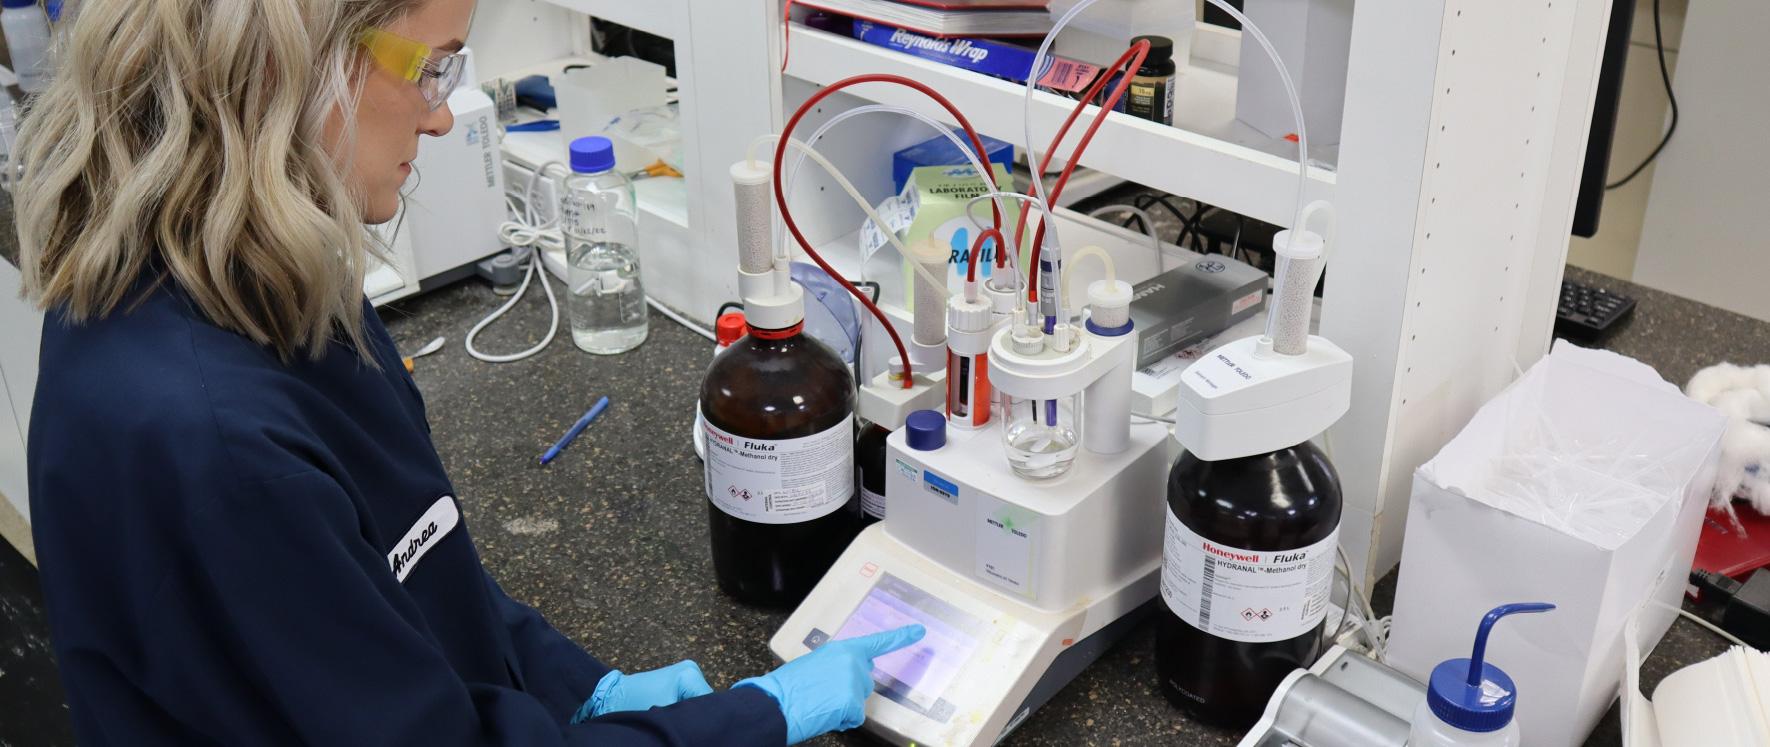 testing procedures being undertaken in a laboratory